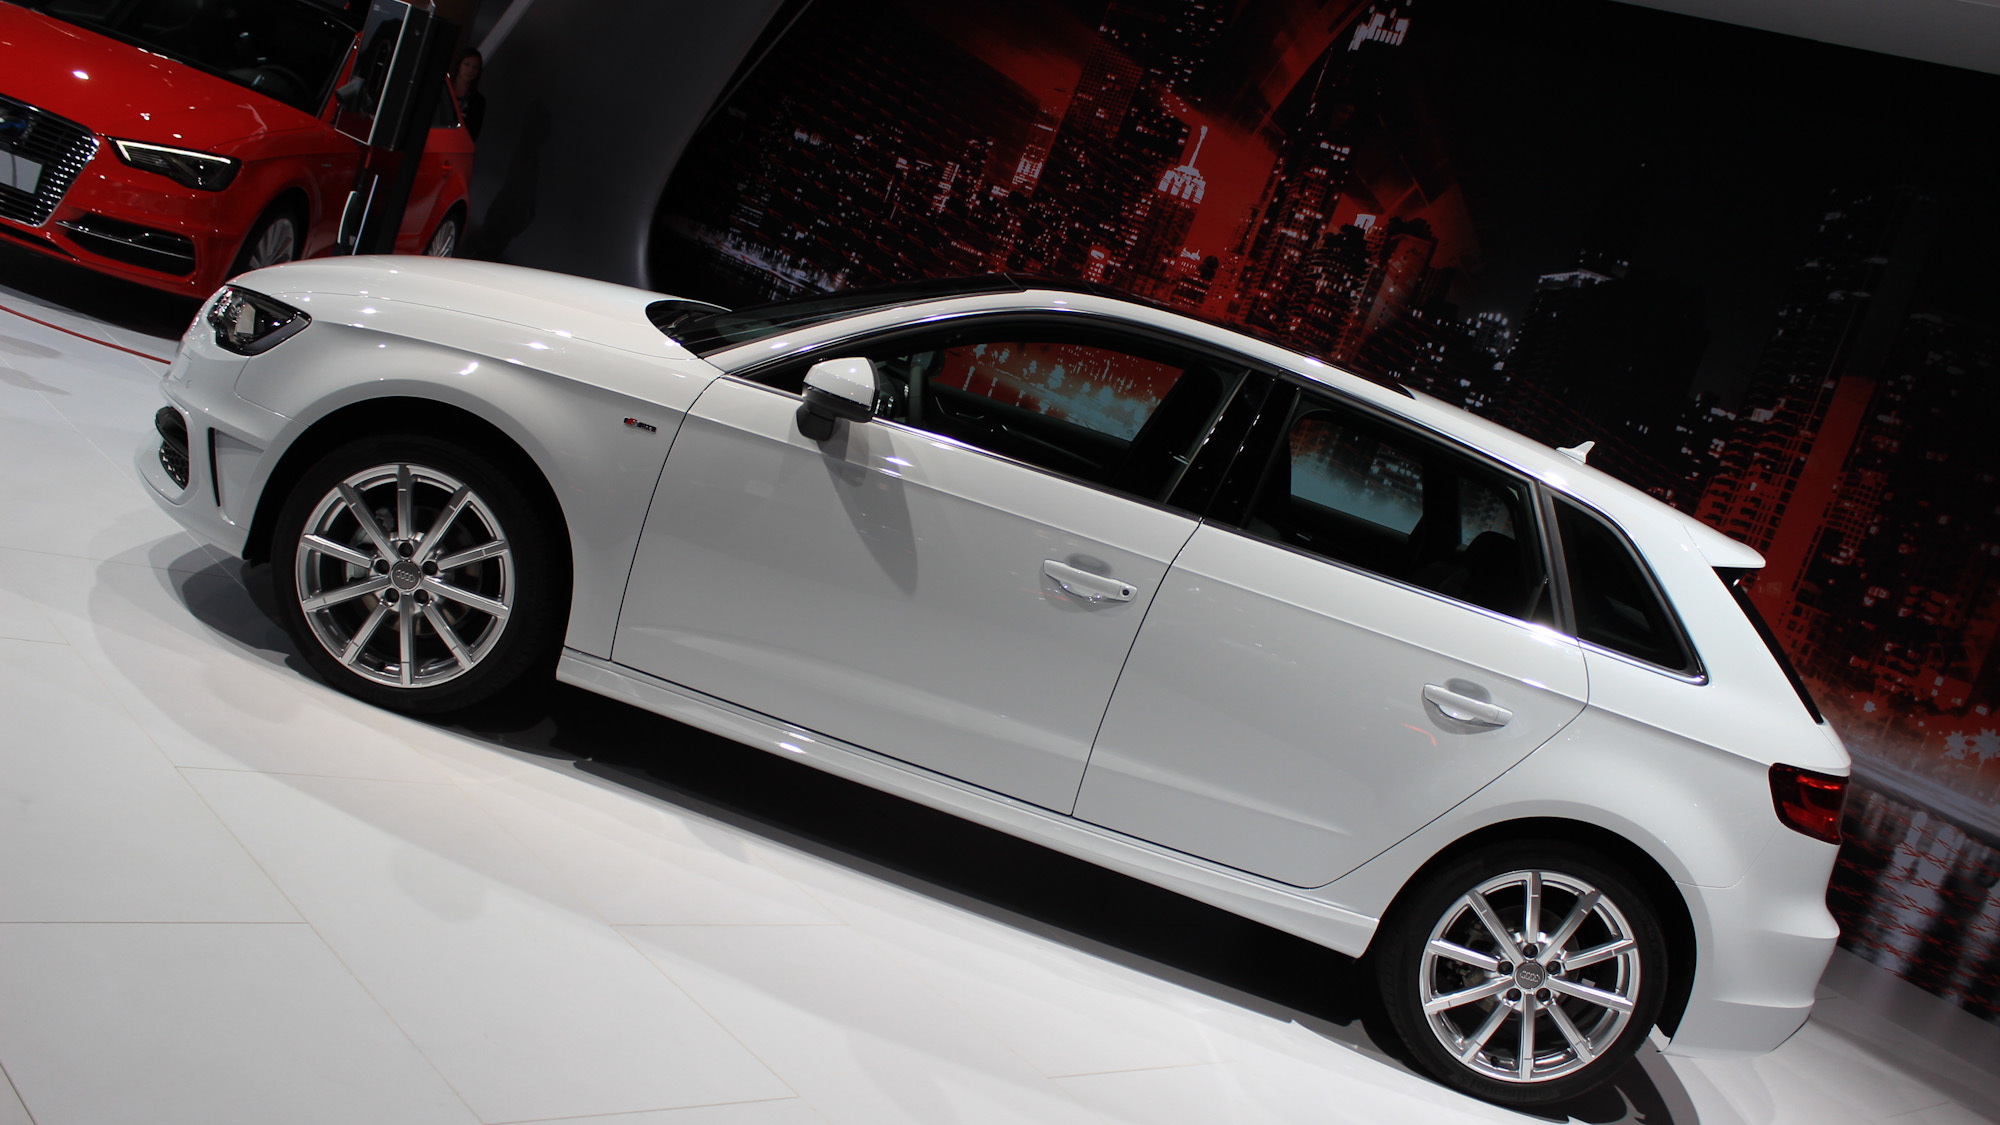 Audi A3 TDI Sportback, 2014 New York Auto Show